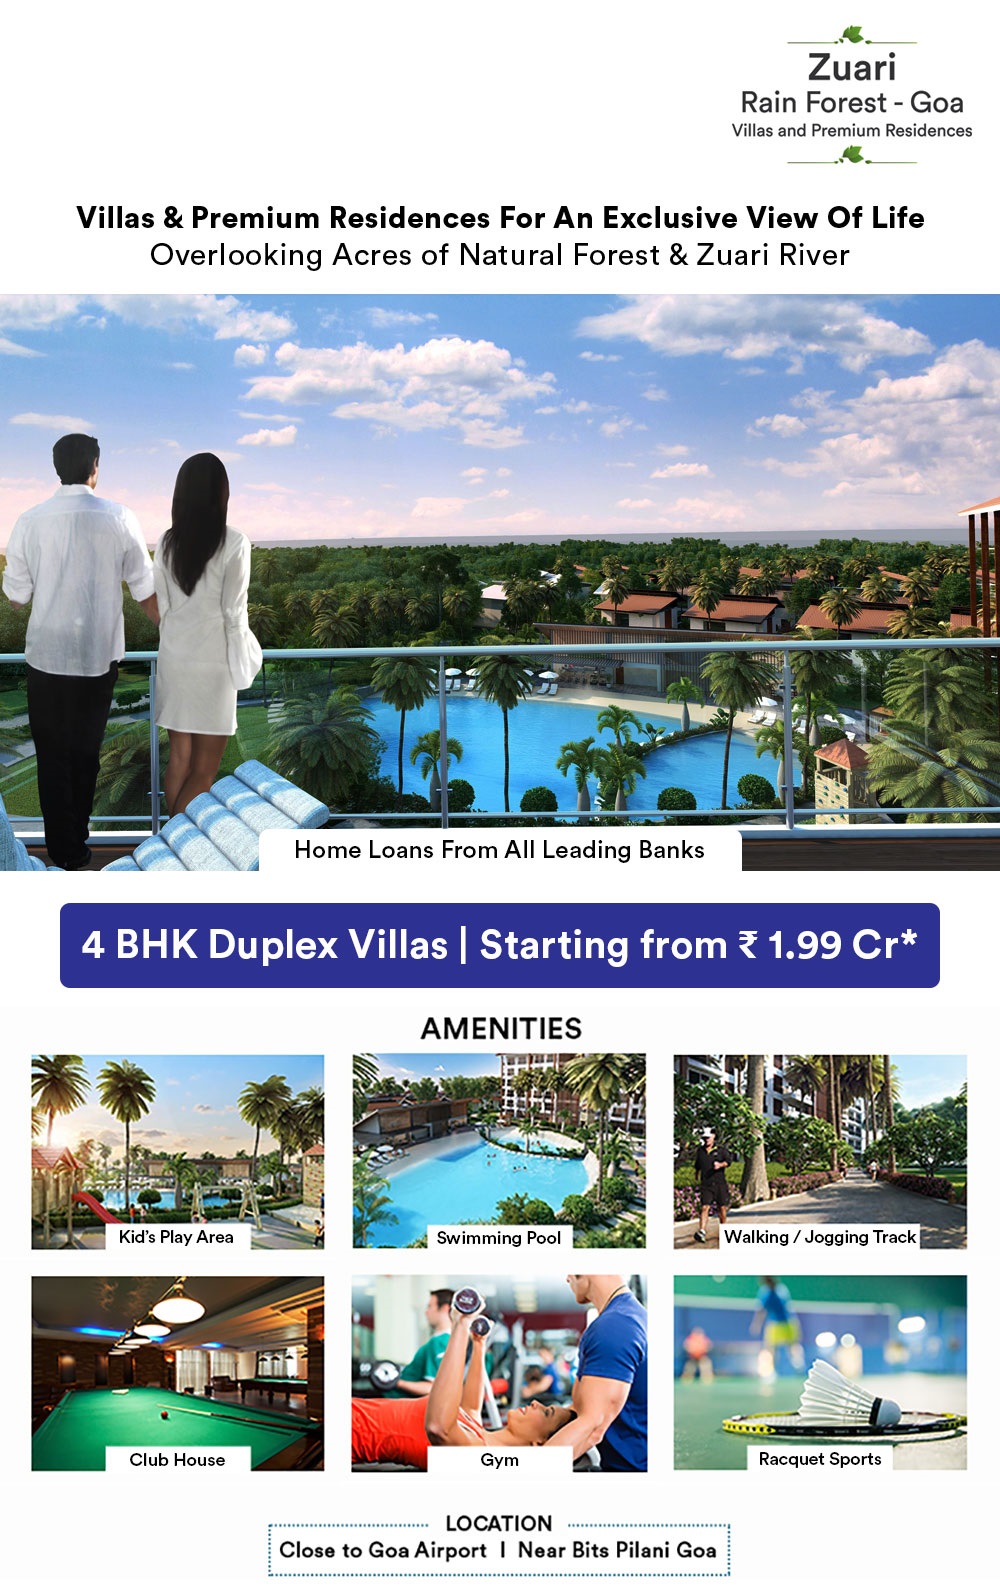 Own 4 BHK duplex villas overlooking acres of natural forest & Zuari River at Zuari Rain Forest in Goa